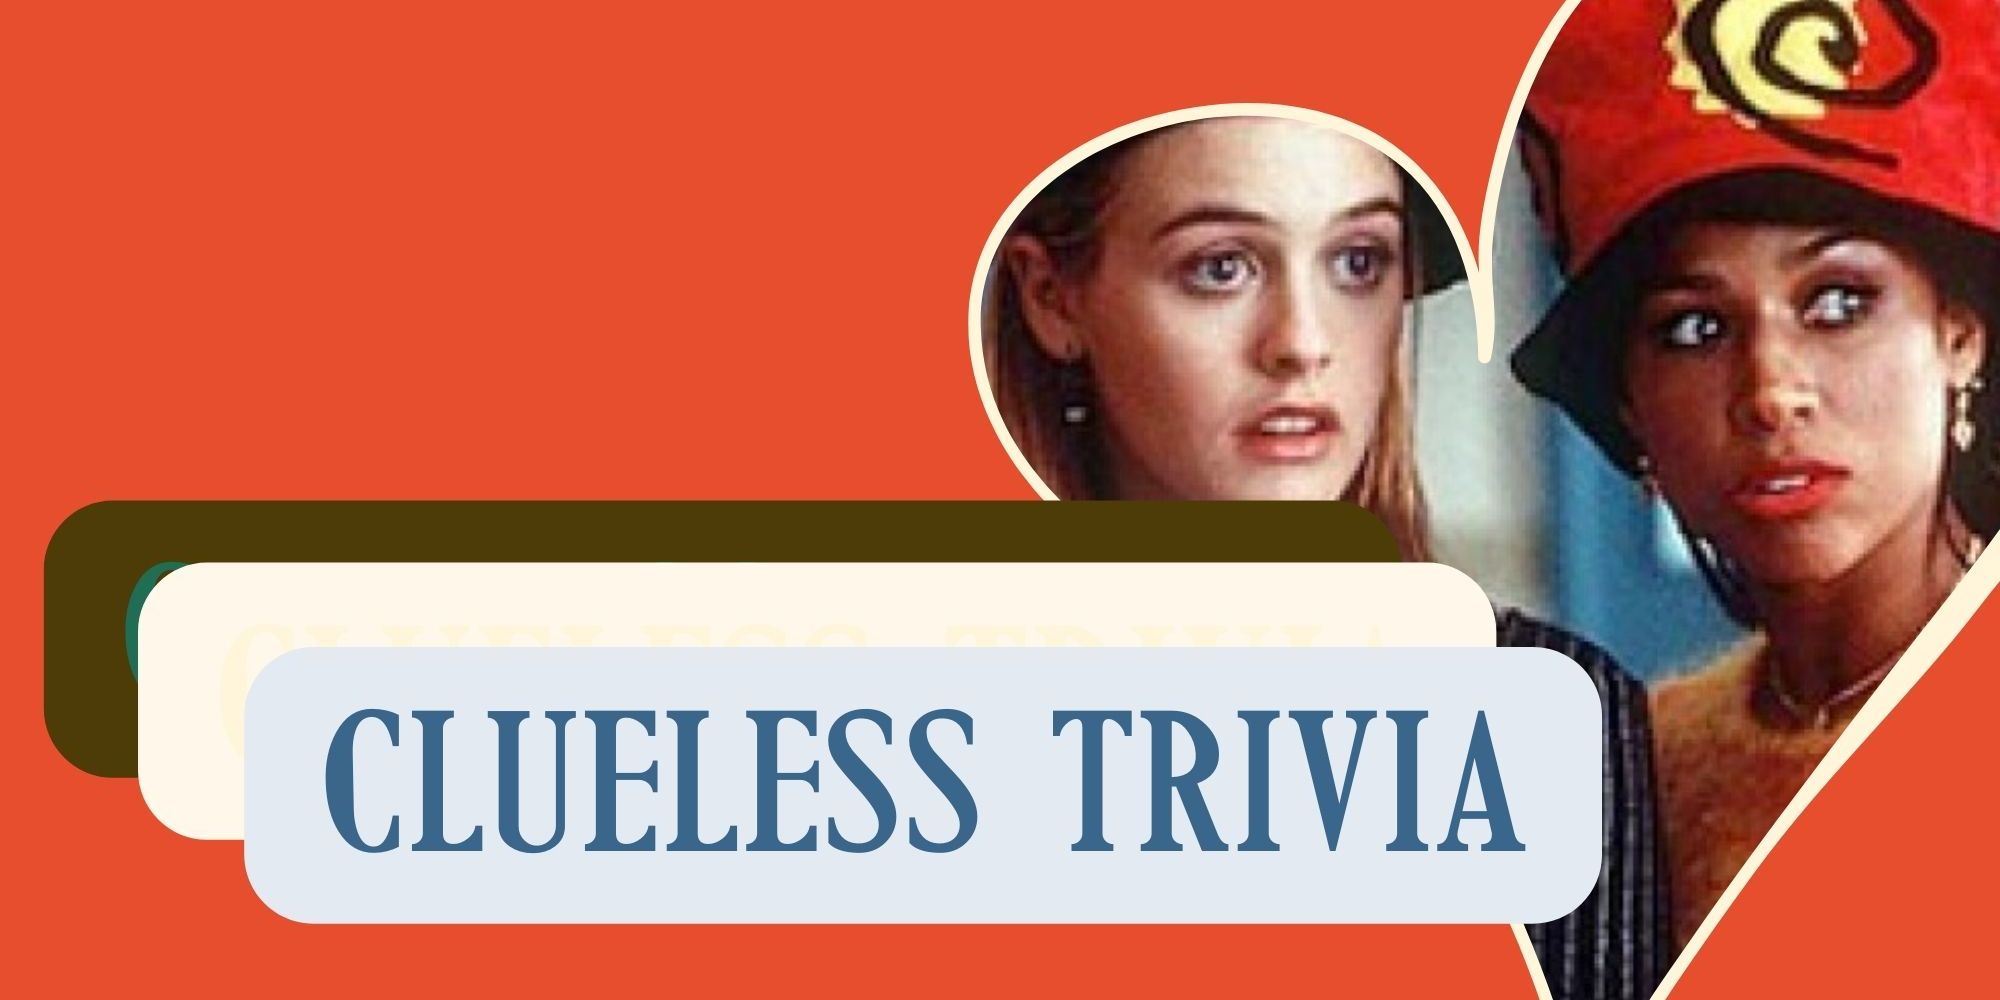 Clueless Trivia Night promotional image